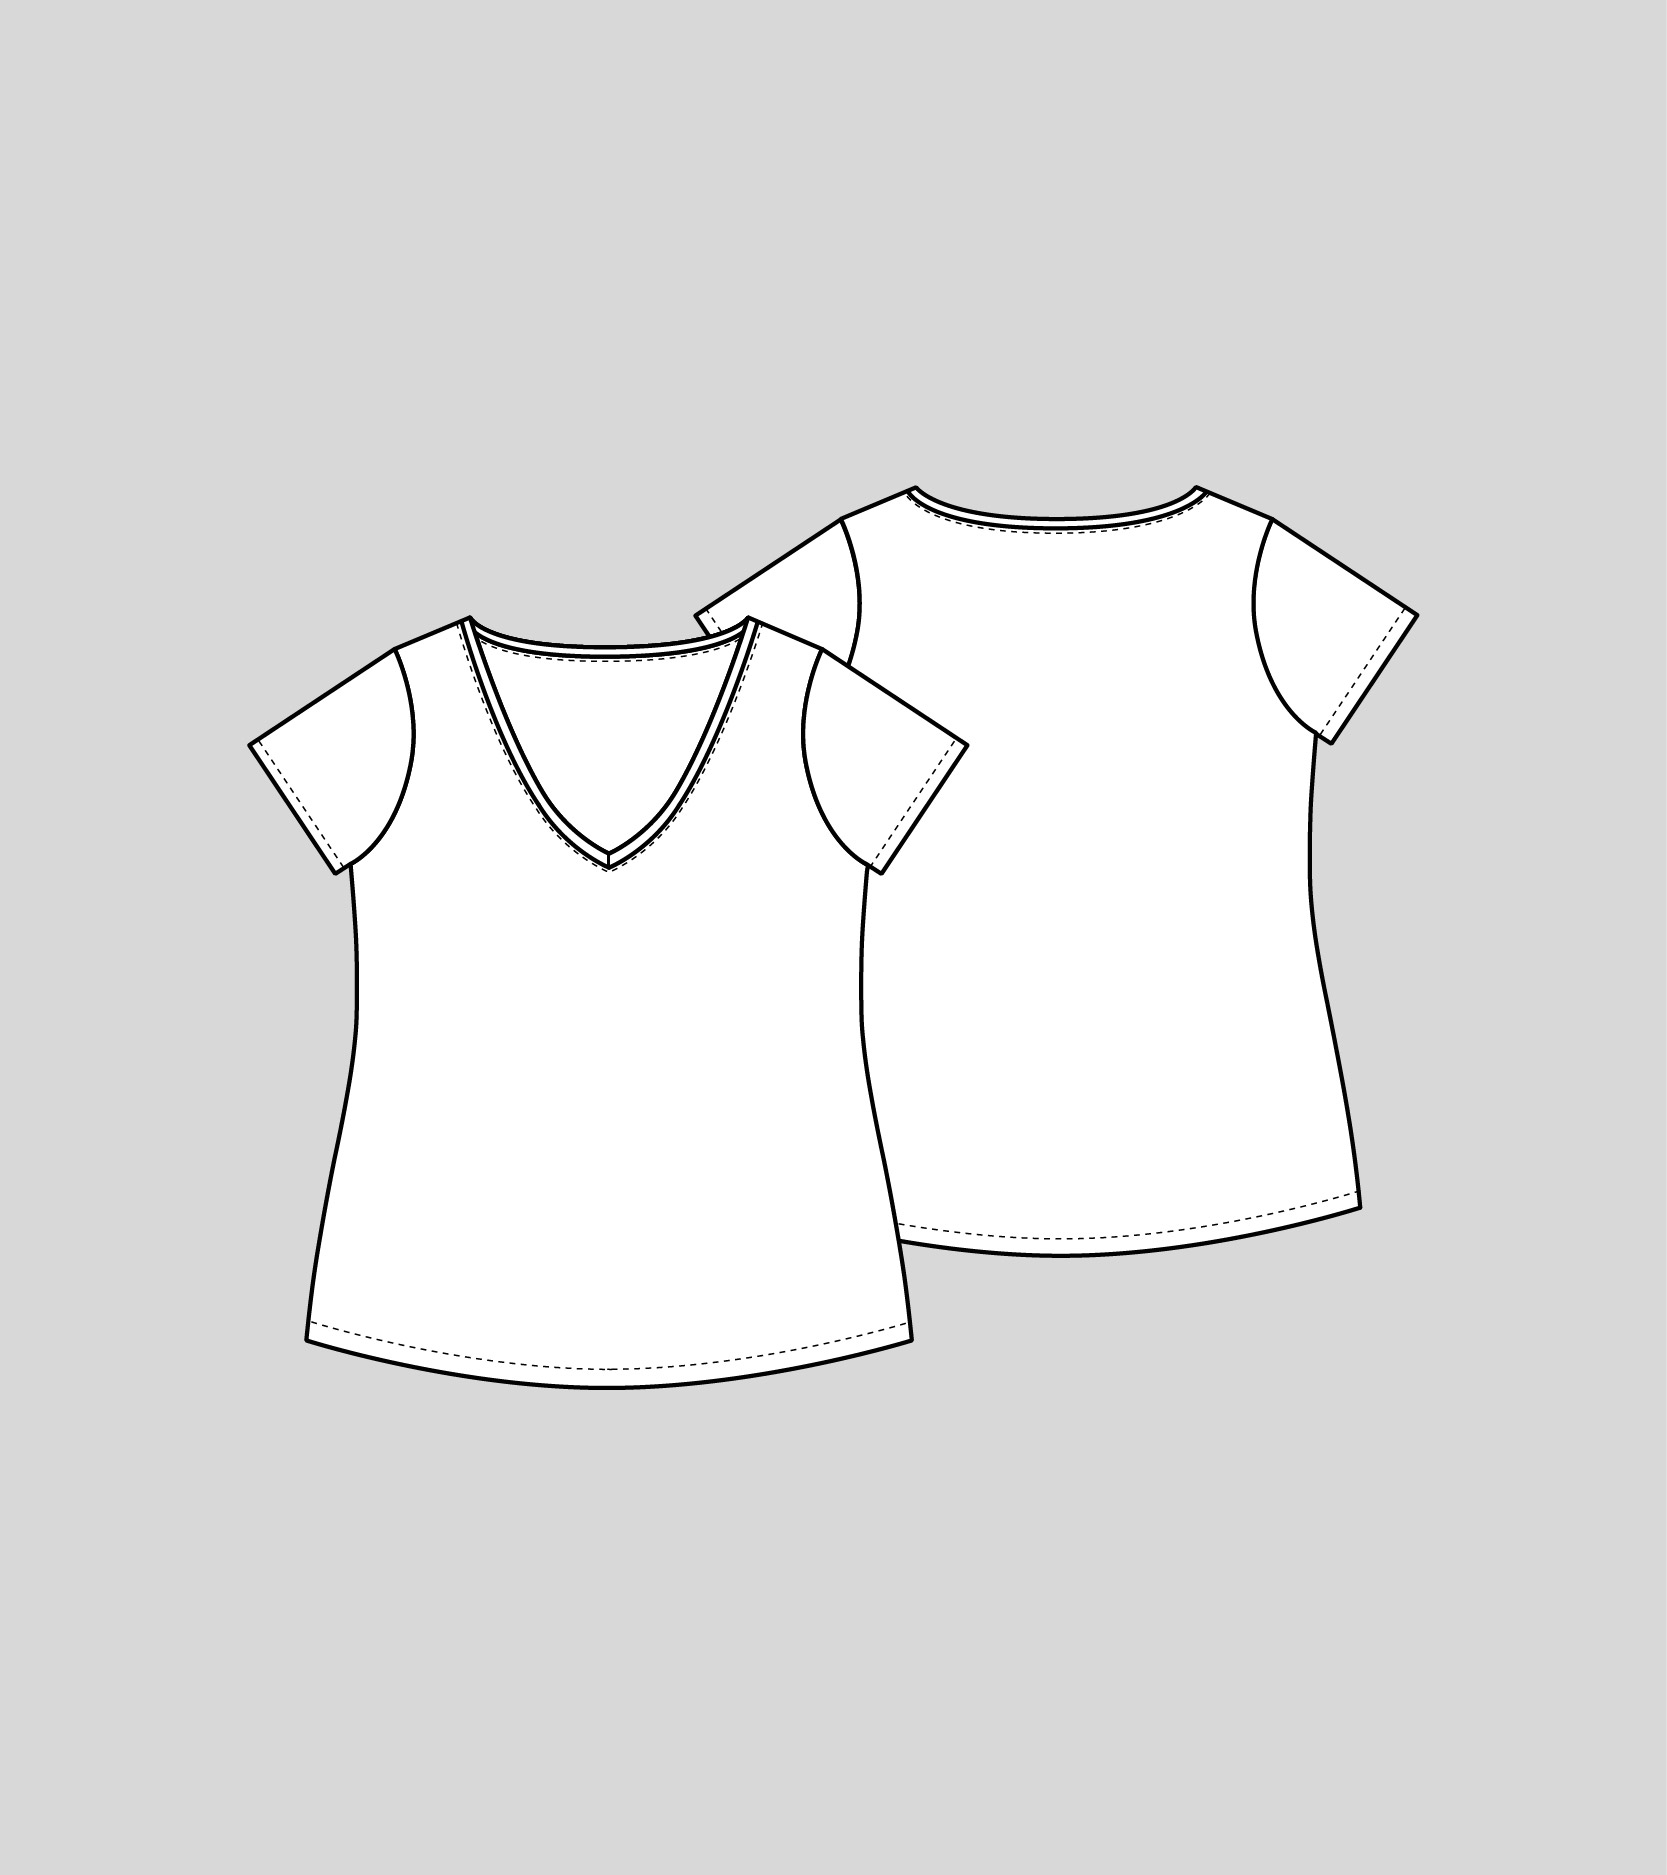 patron de costura camiseta basica manga corta dibujo plano